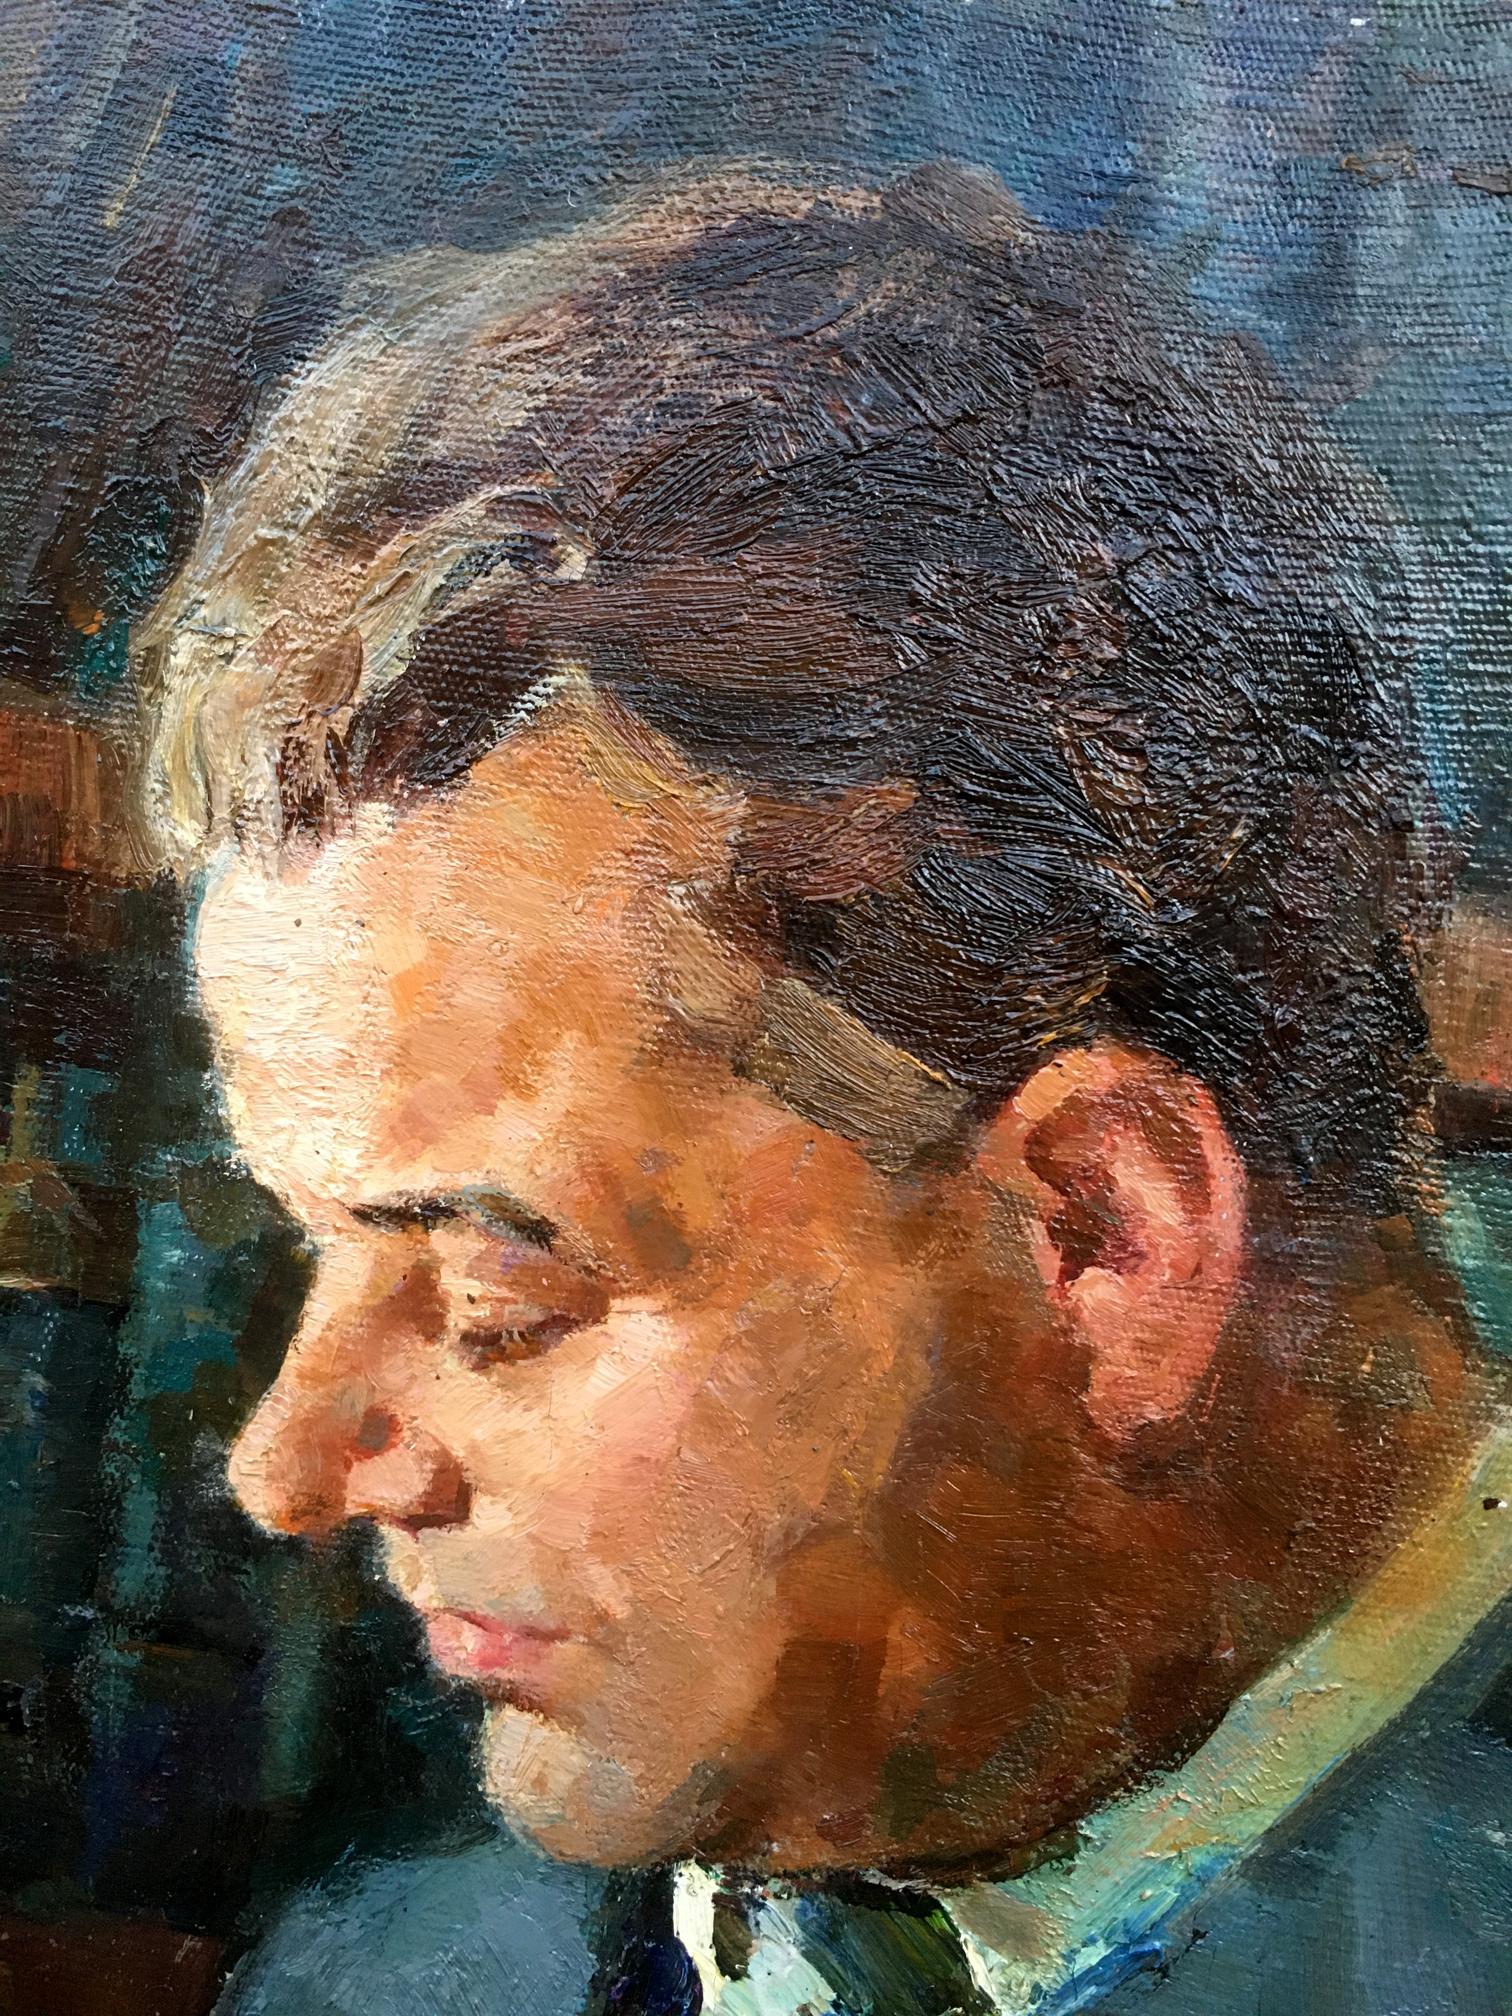 Oil on canvas "Portrait of a Man" by Alexey Sidorov